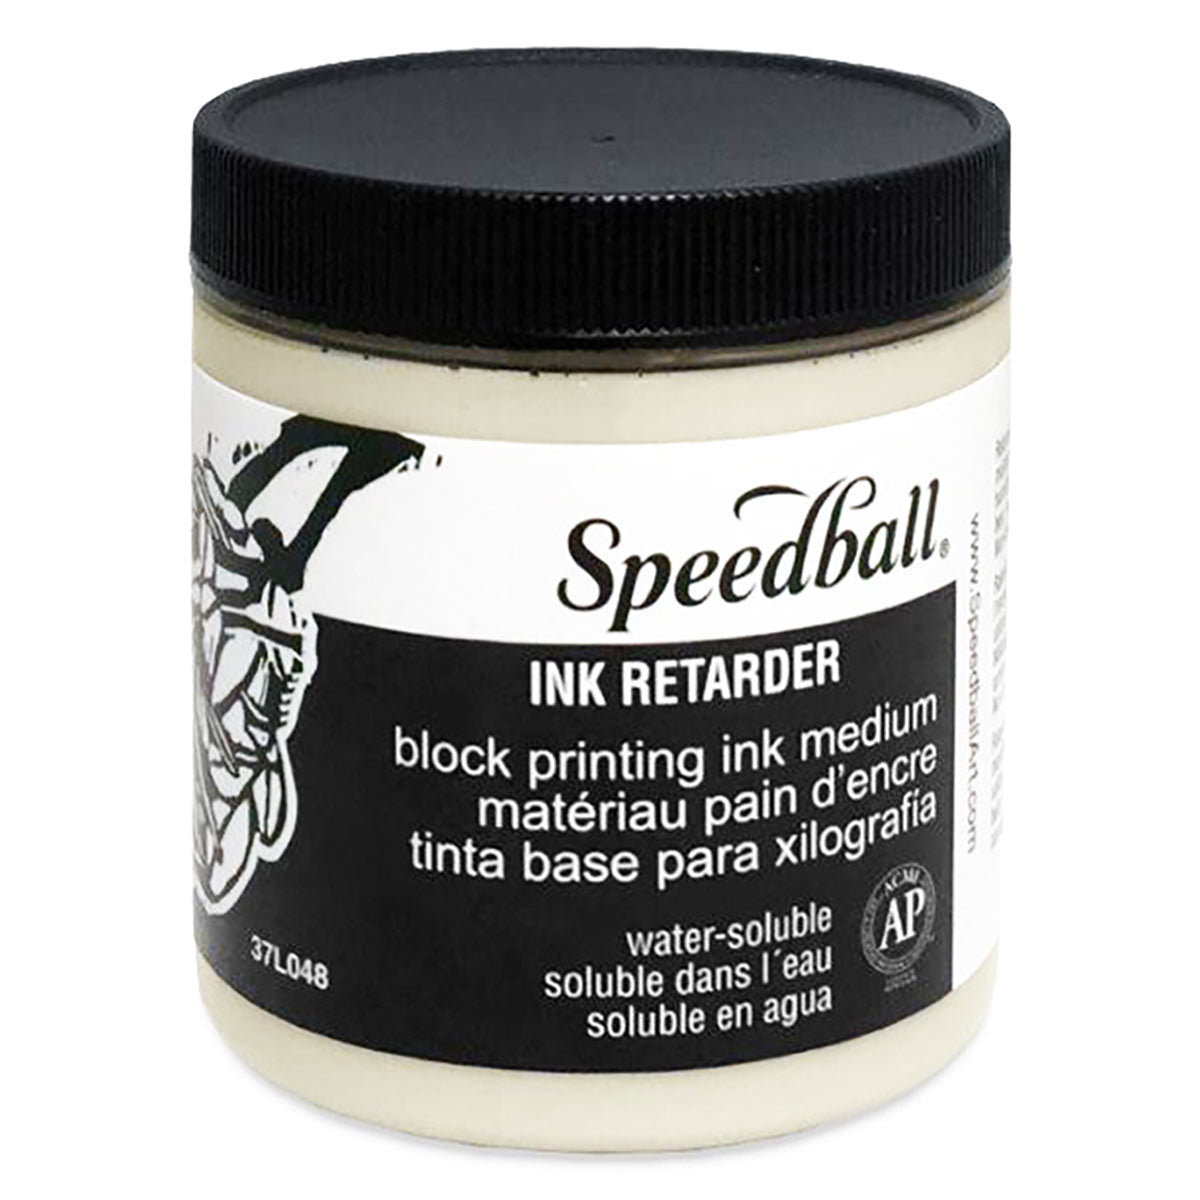 Speedball - Water-Soluble Block Printing Ink Retarder 236ml (8oz)